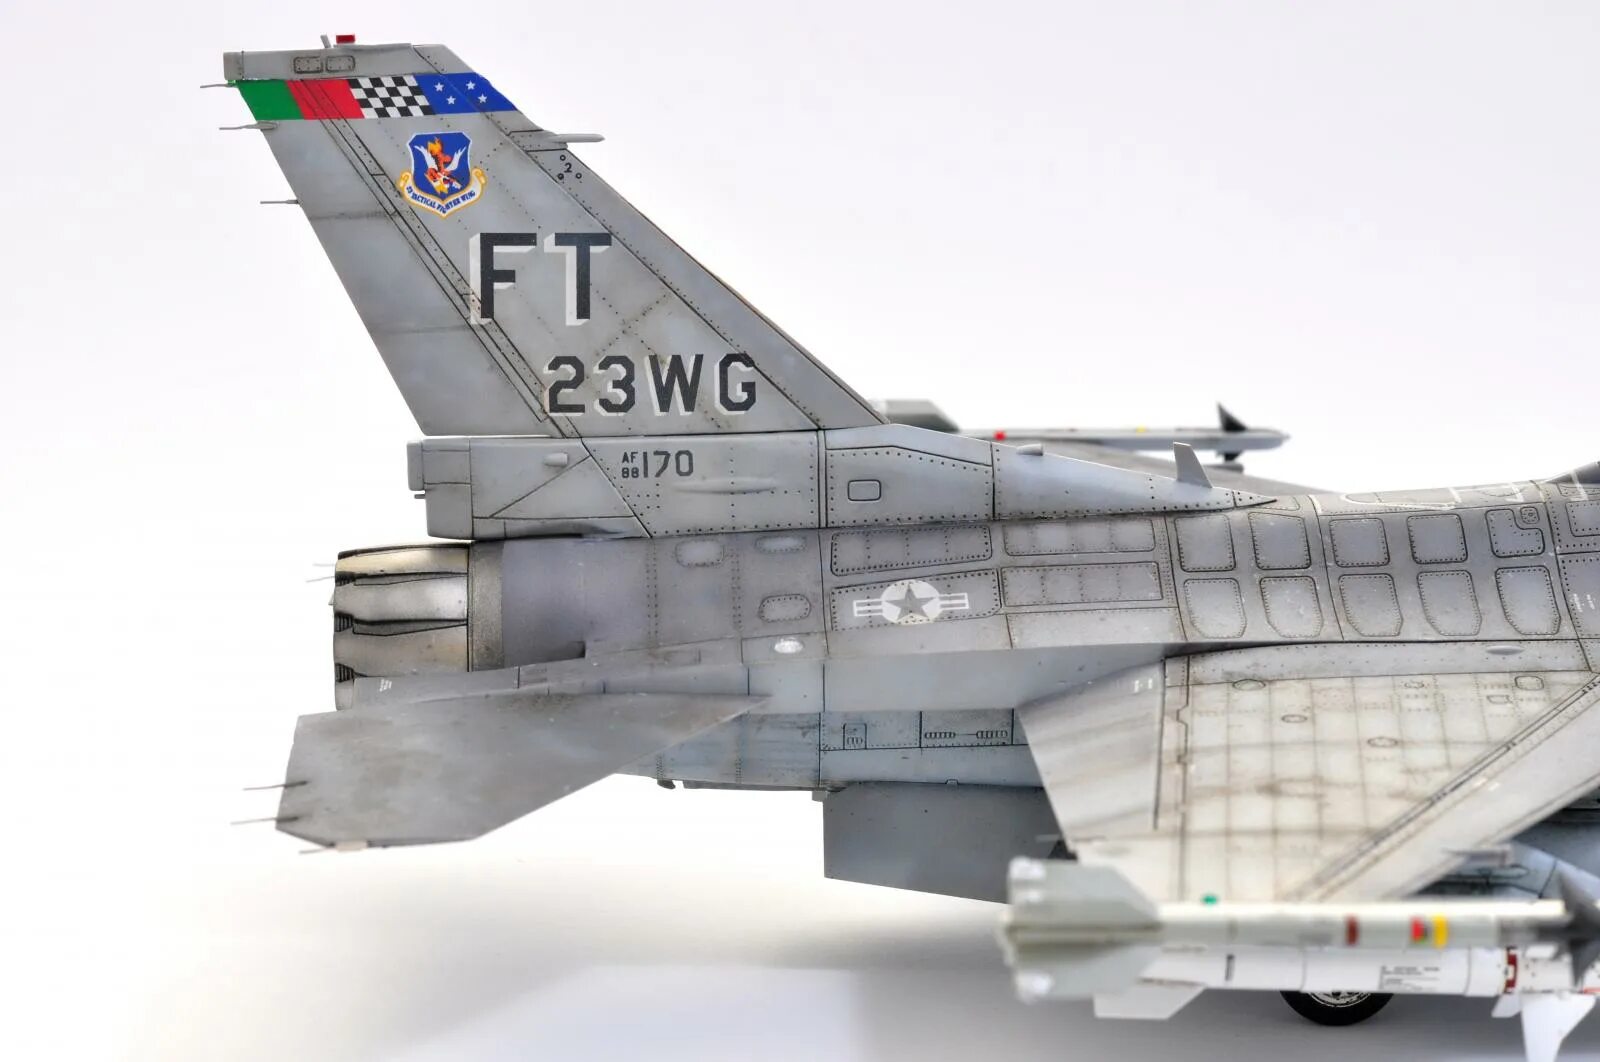 F 1 48. F-16c 1/48 Kinetic 48102. F-16mlu Kinetic 1/48. F-16 Kinetic 1/48. Модель f 16 1/48 от Кинетик.